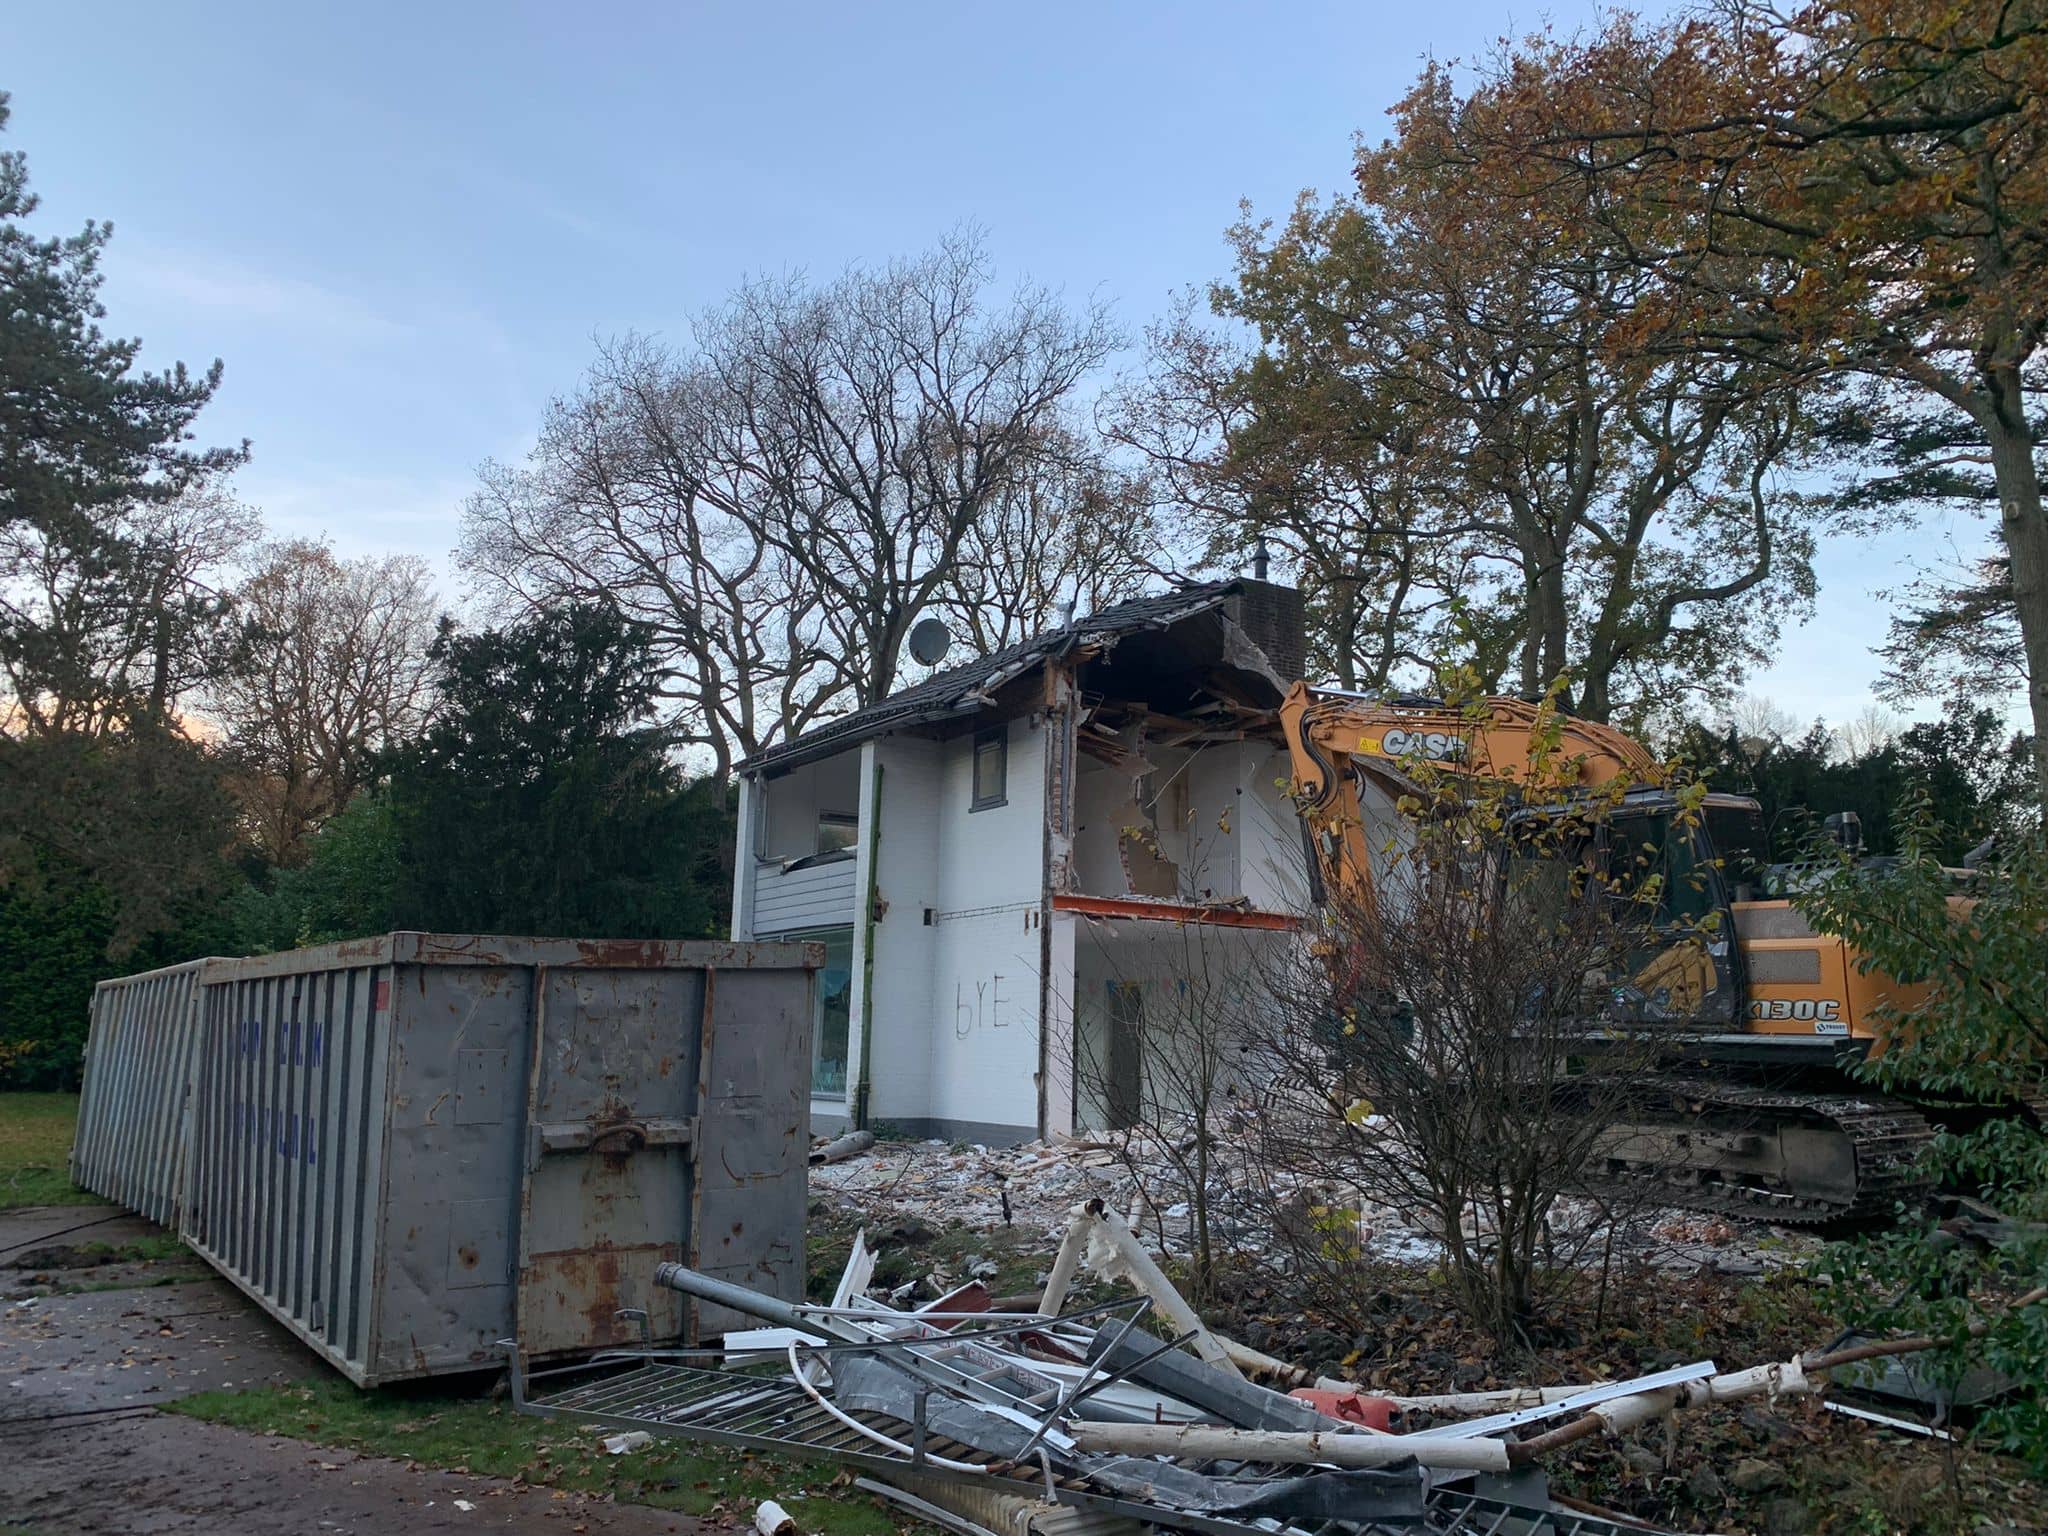 Afzetbak.nl demolition work for a customer